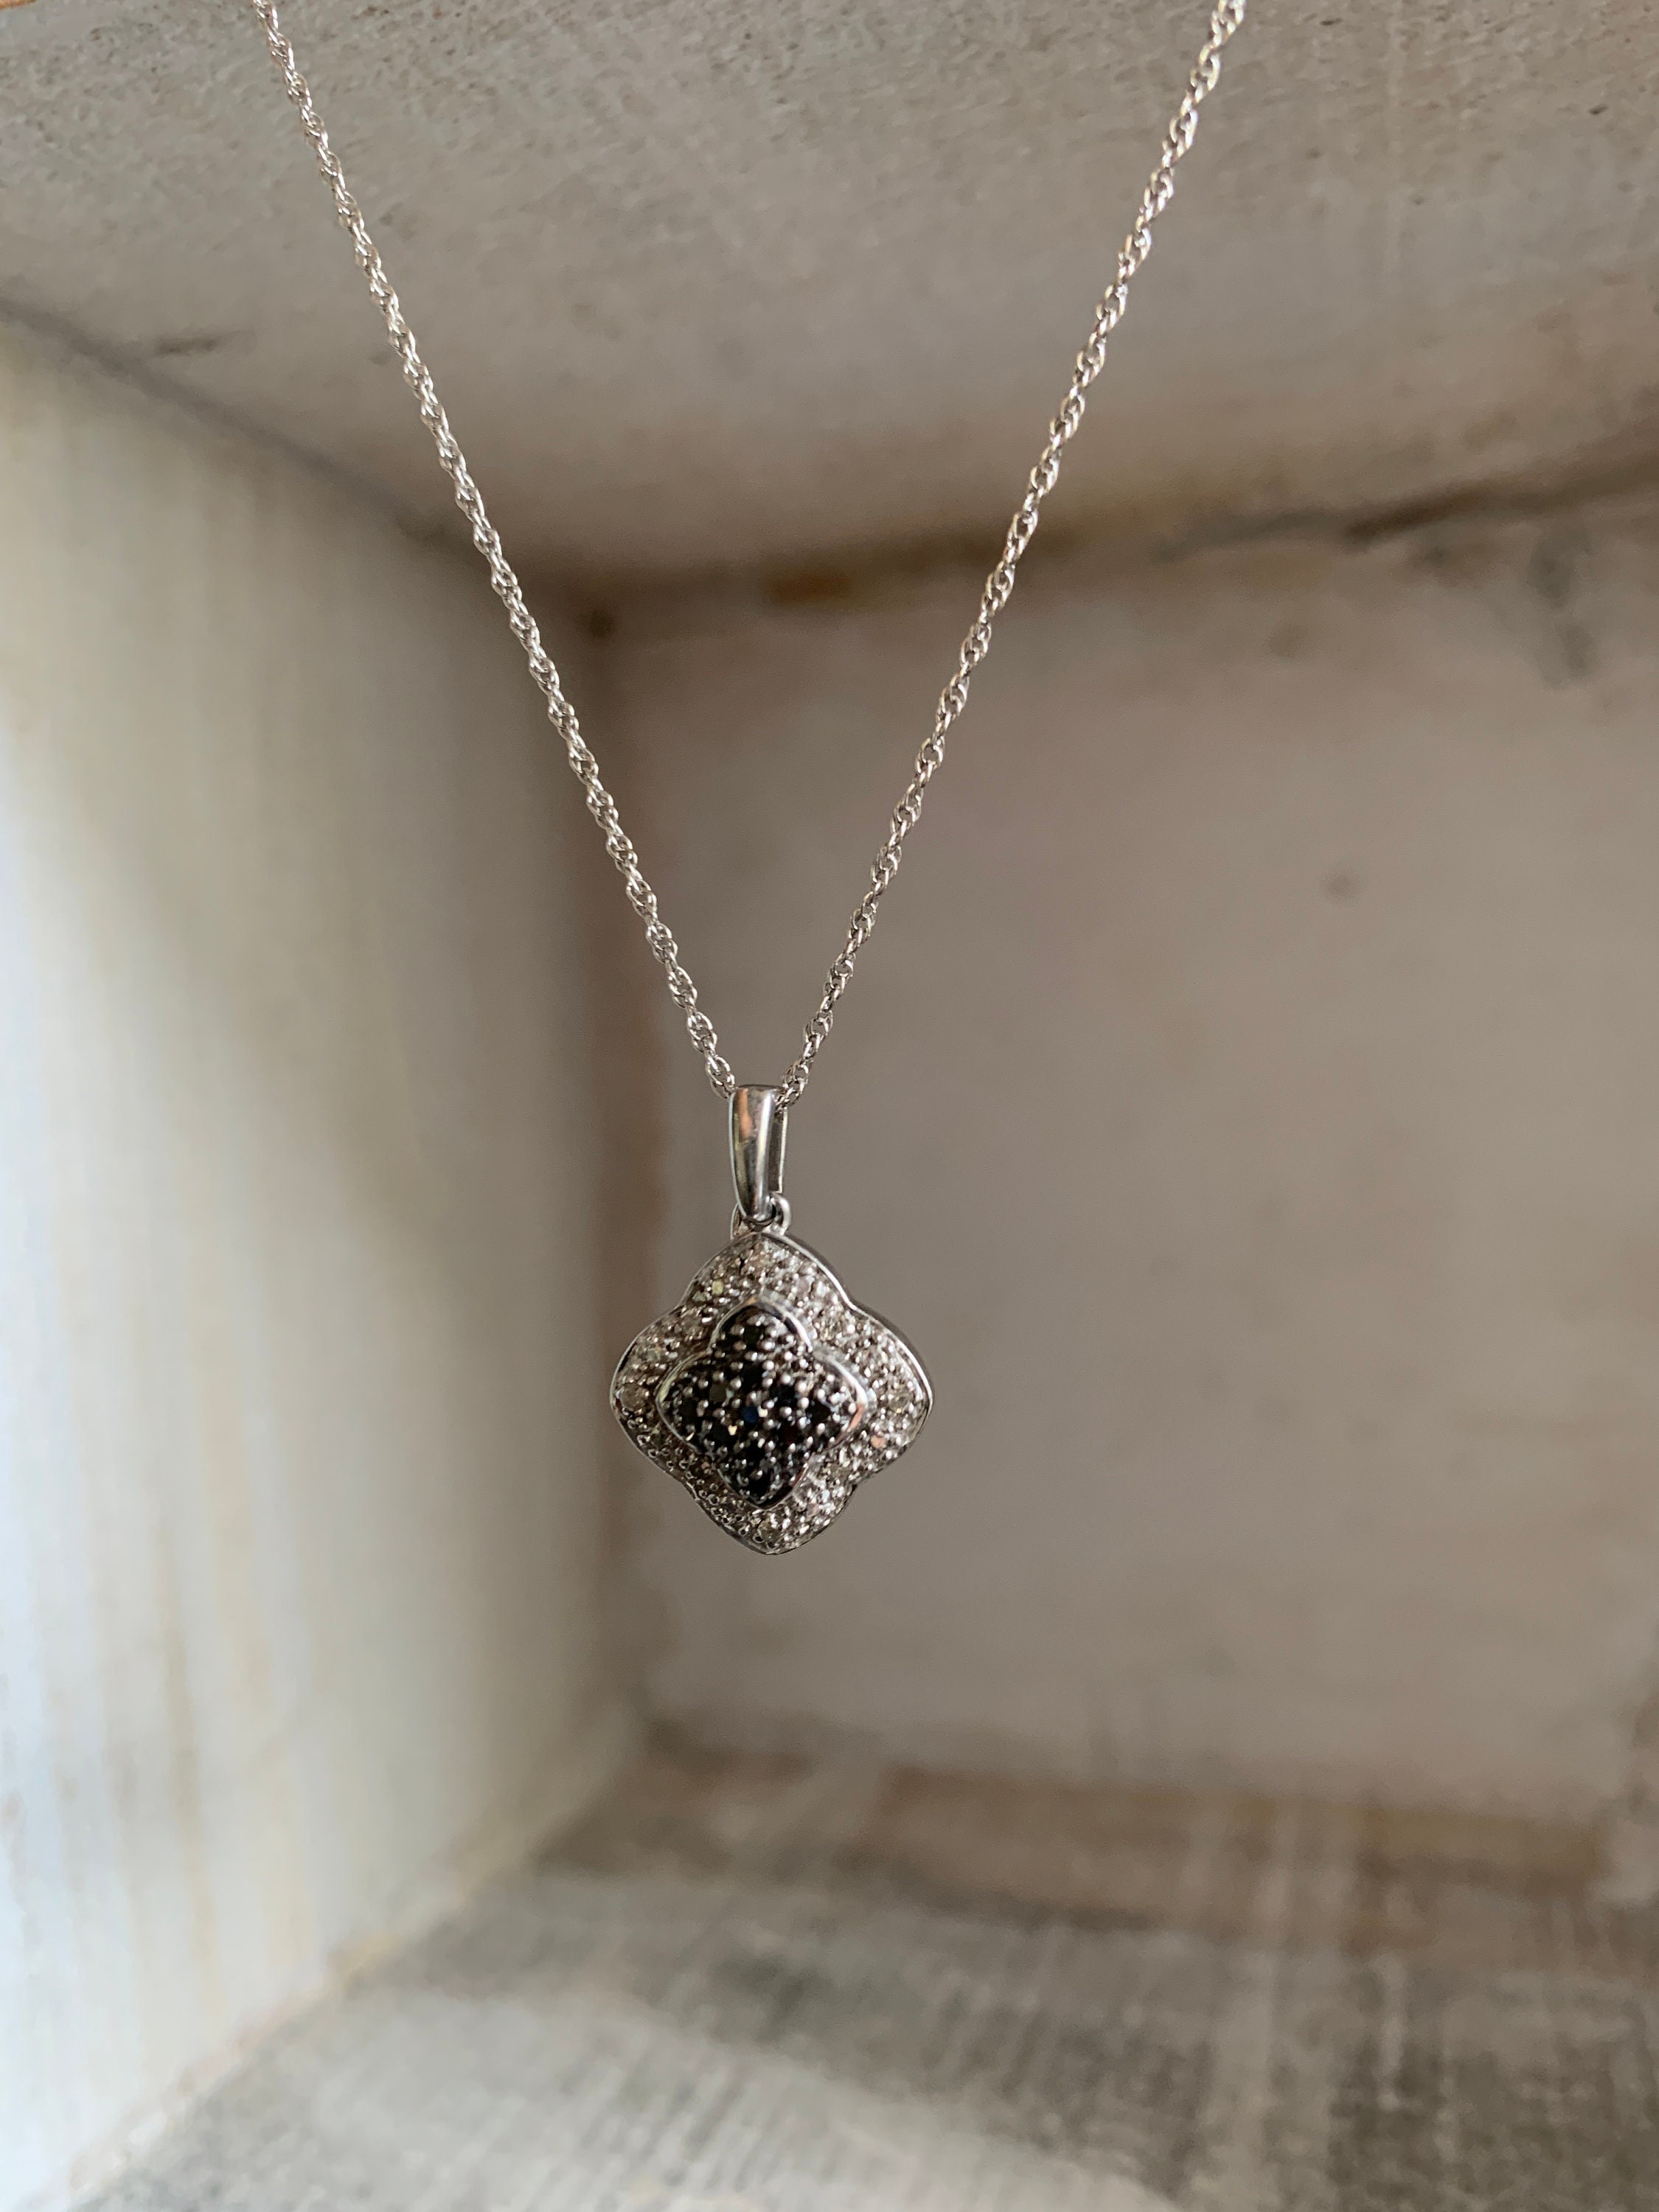 STERLING SILVER  fleur de lis necklace with marcasite stones 18inch 925 